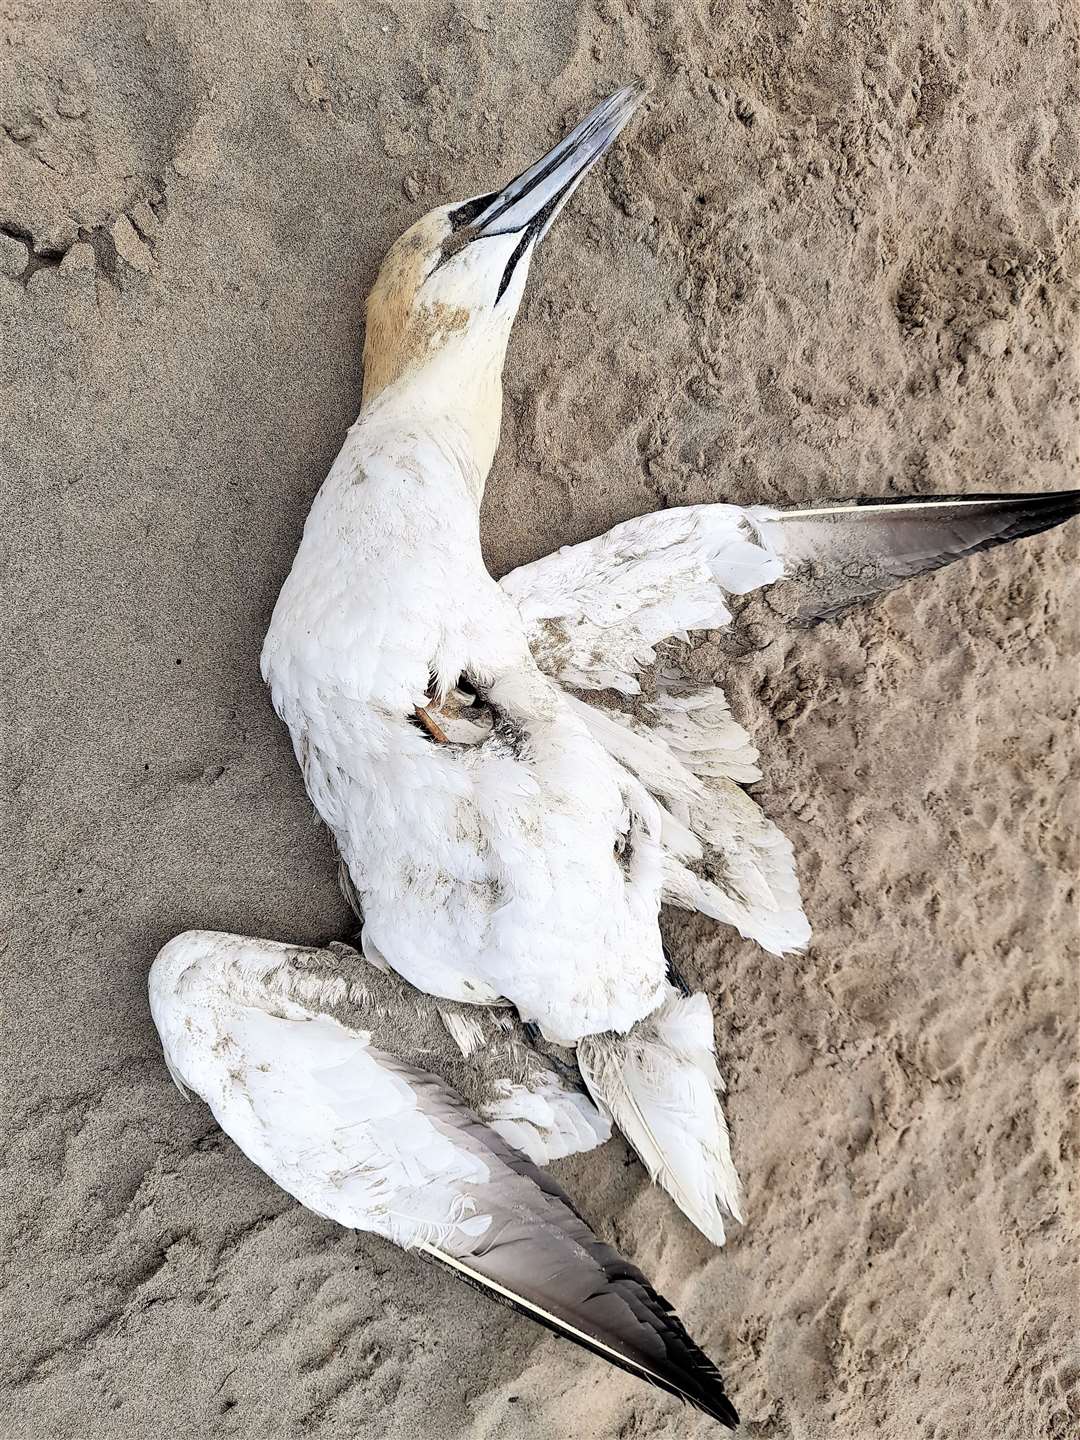 A dead gannet found by Allan and Dorcas Sinclair on Dunnet beach this week. Pictures: Dorcas Sinclair